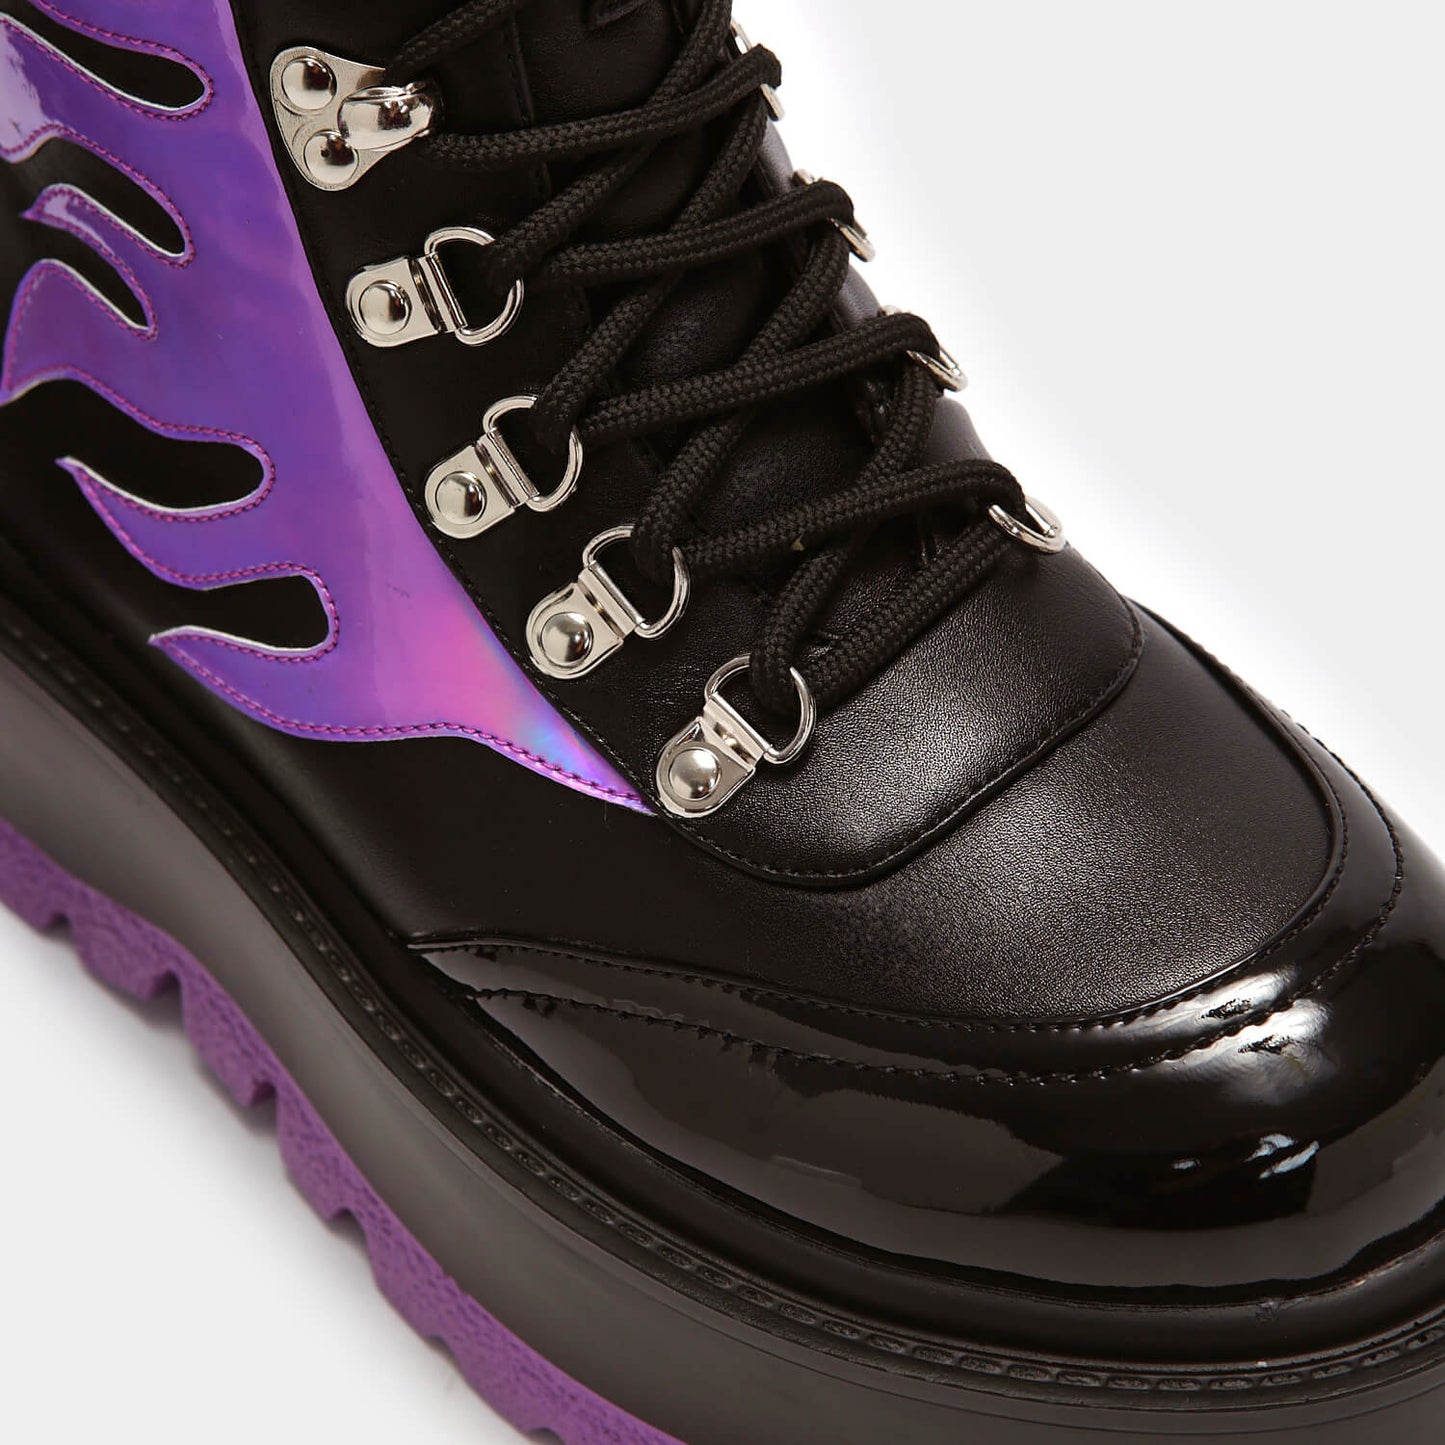 Helios Purple Hologram Flame Boots - Ankle Boots - KOI Footwear - Purple - Front Detail